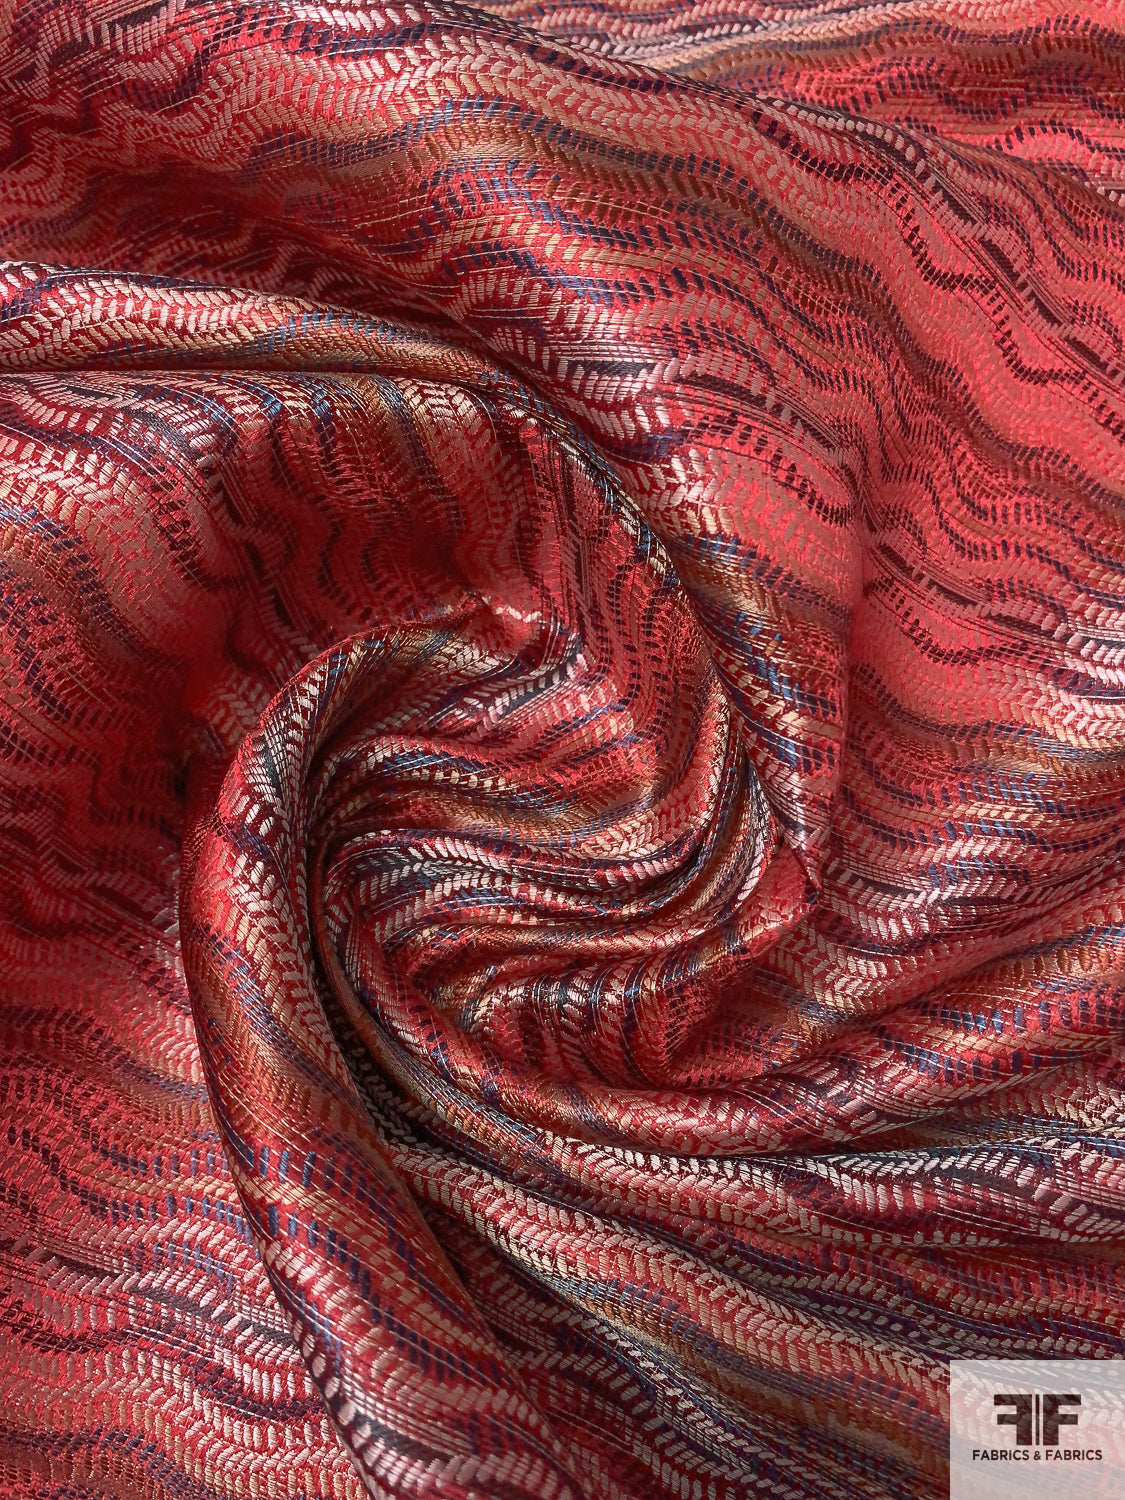 Wavy Striped Silk Necktie Jacquard Brocade - Reds / Blues / Saddle Brown